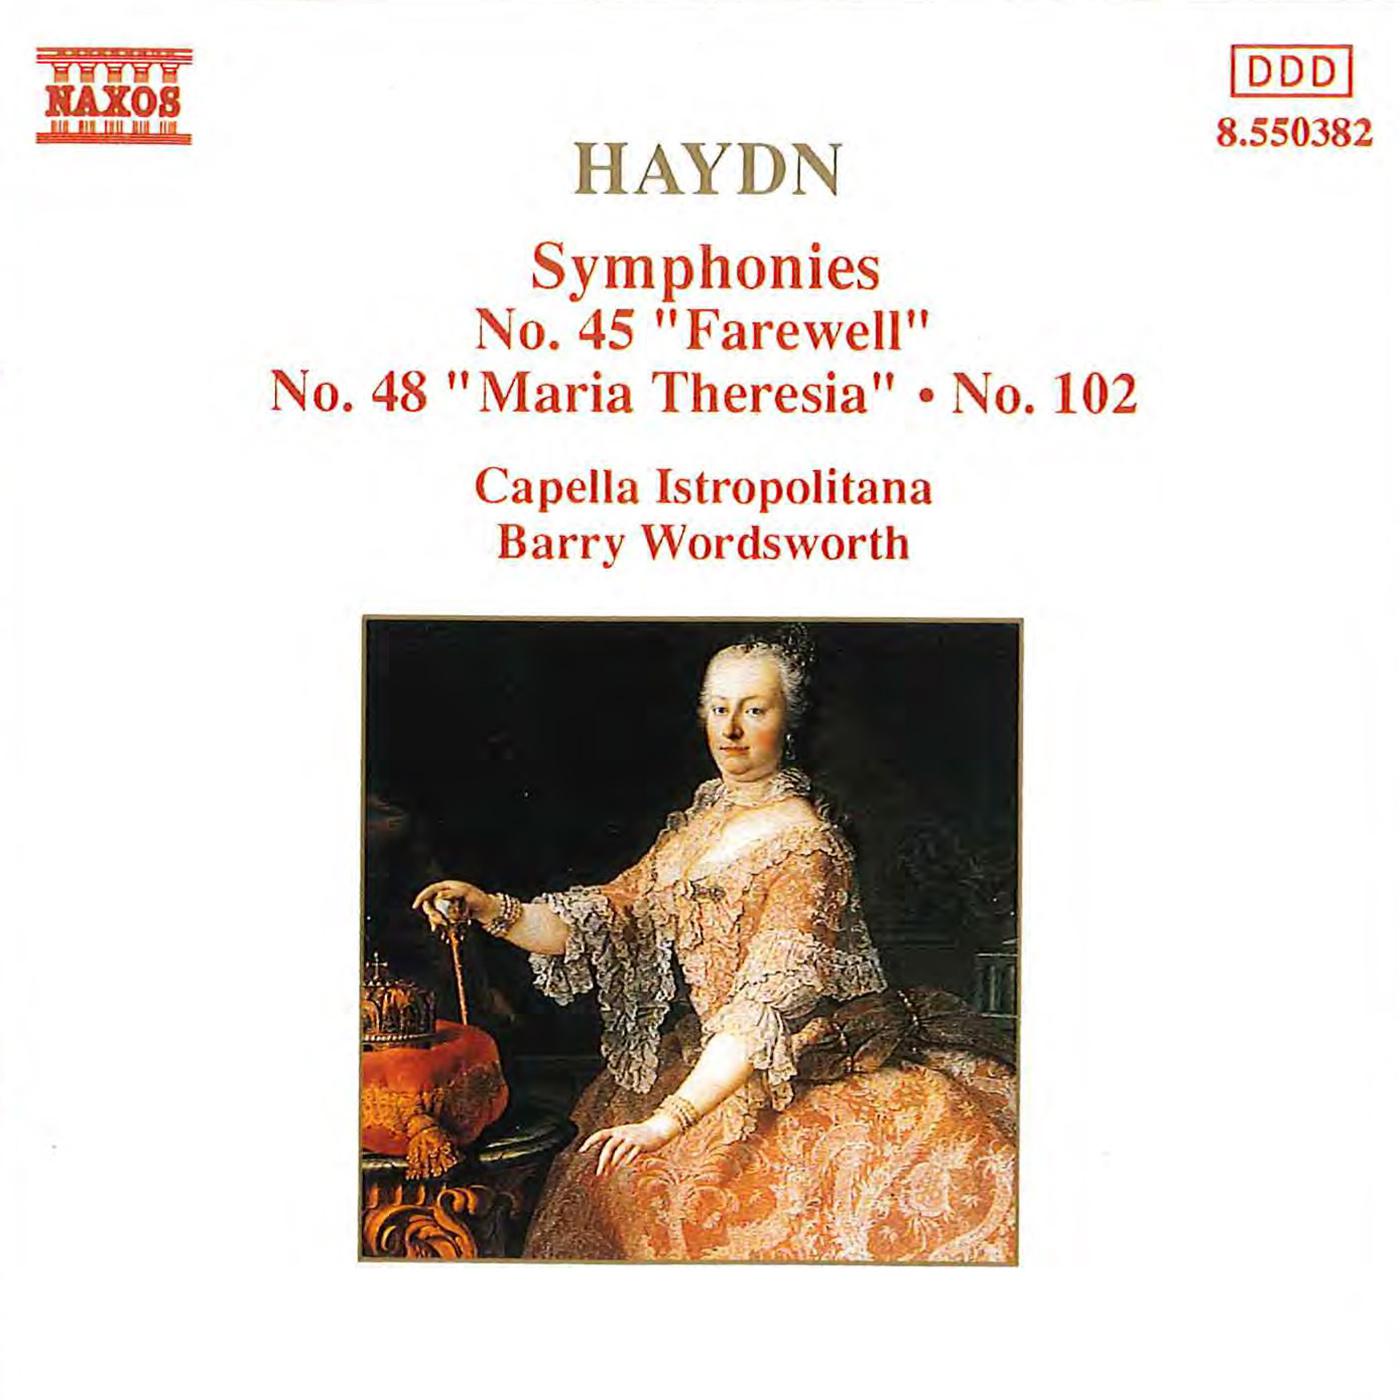 HAYDN: Symphonies, Vol.  4 (Nos. 45, 48, 102)